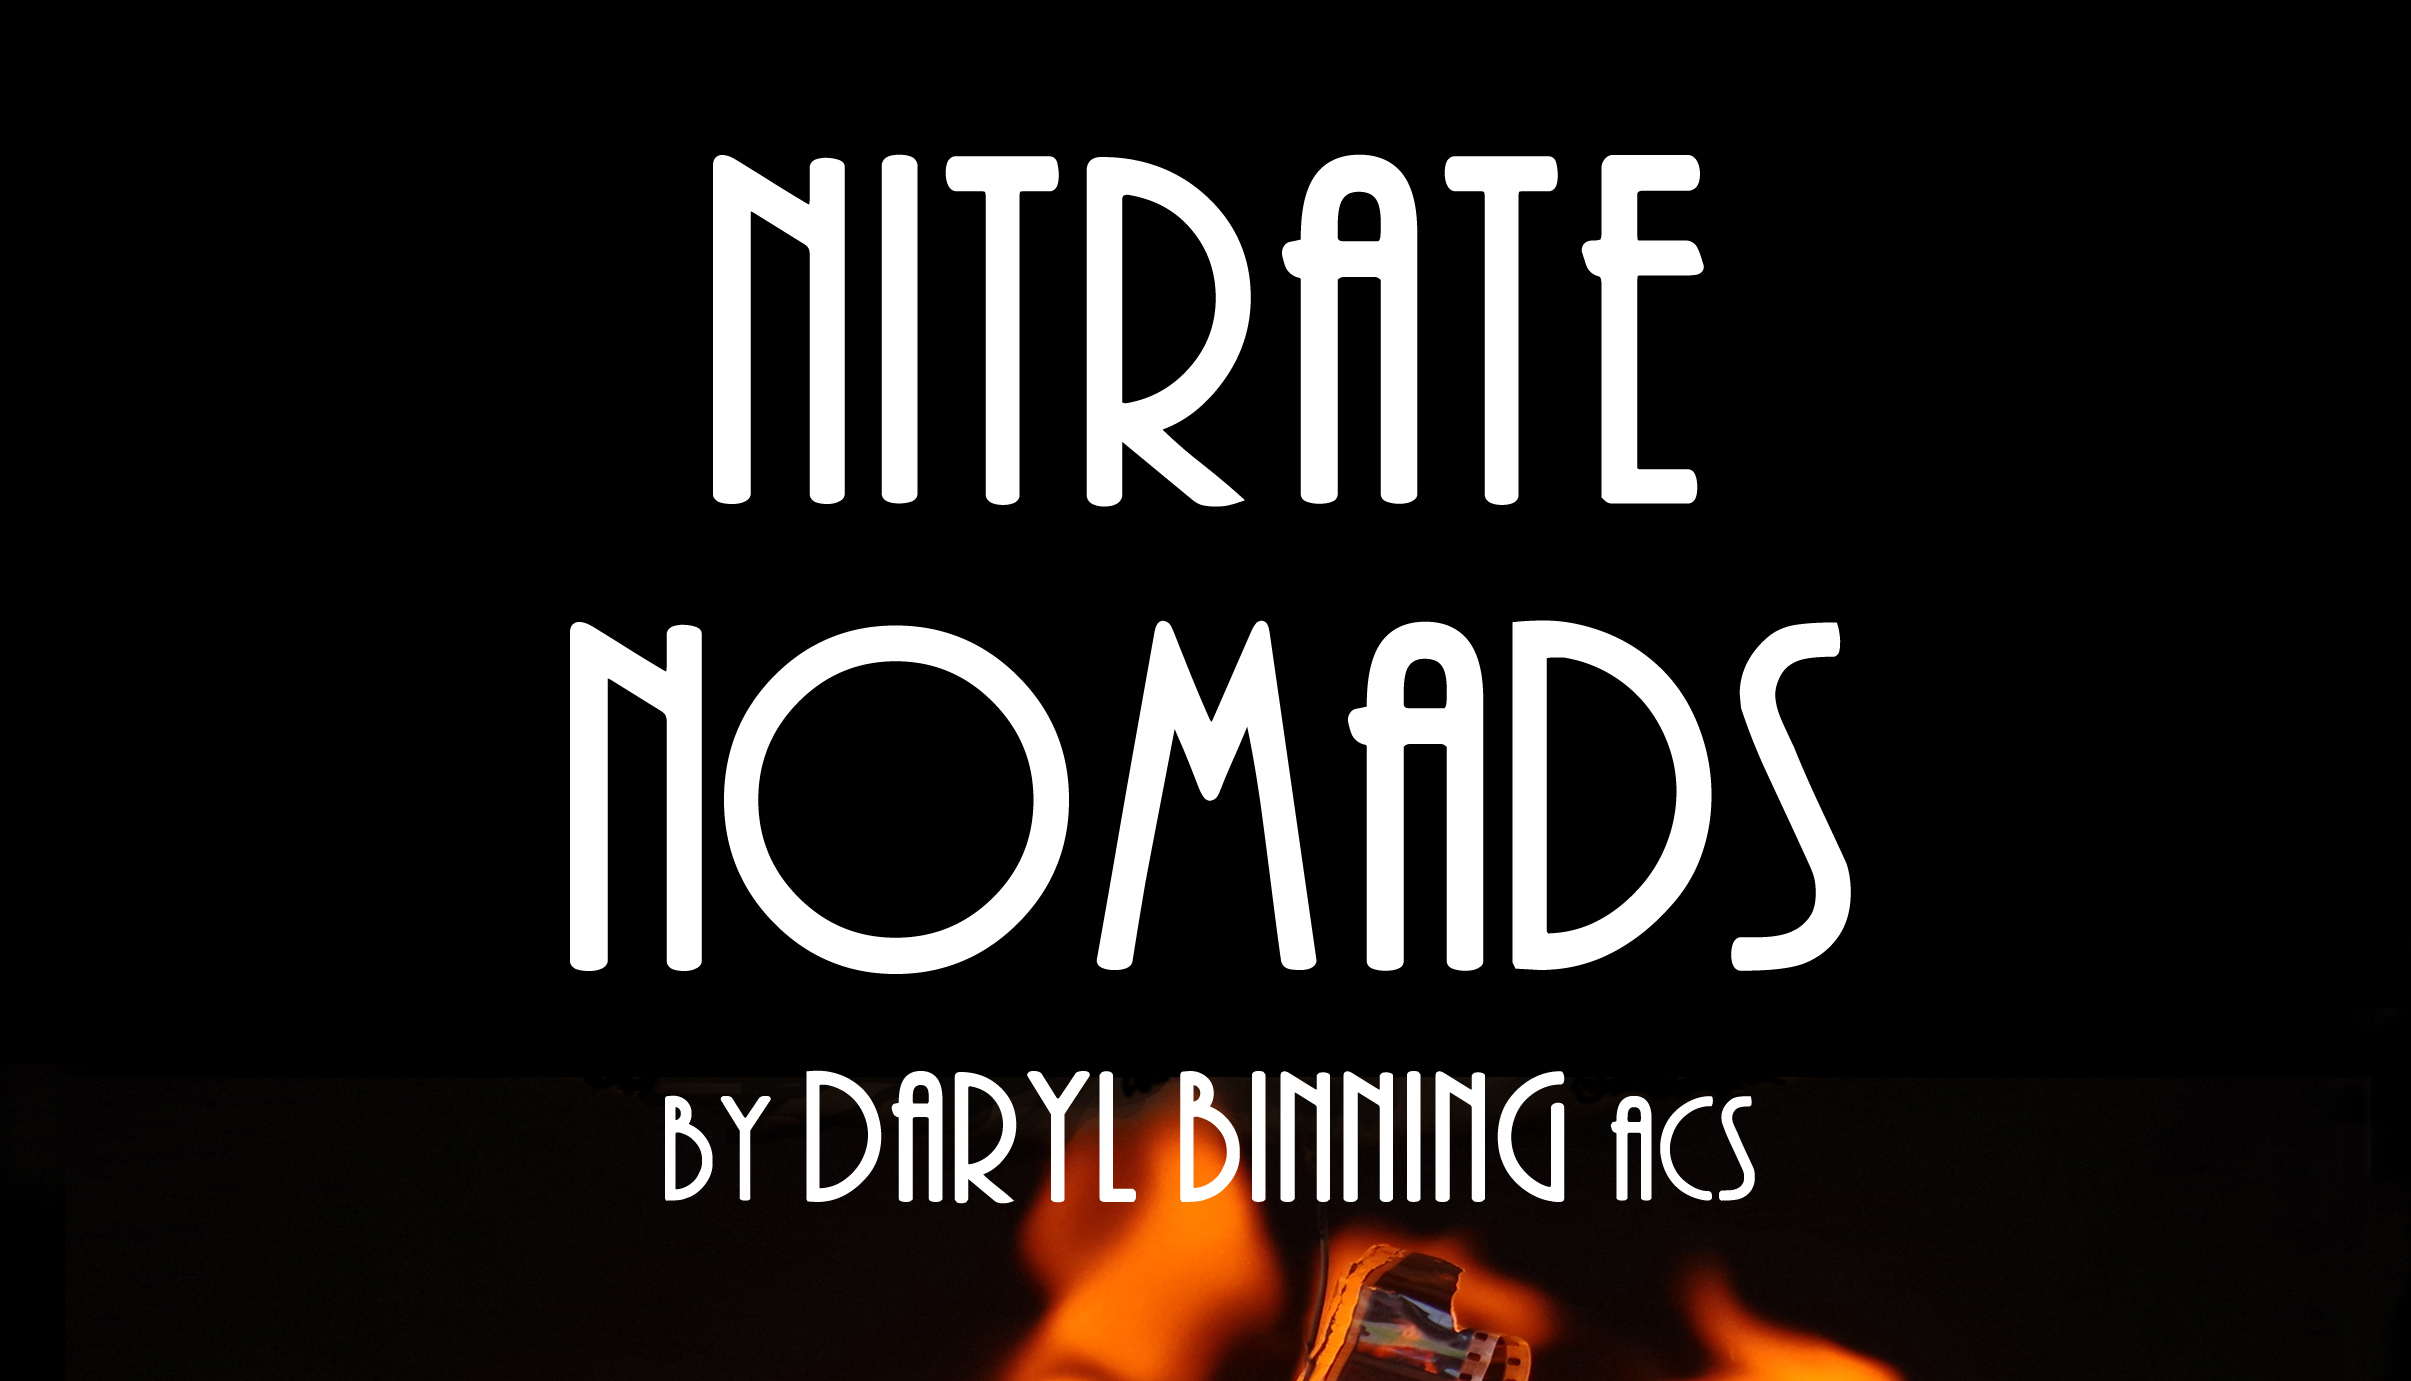 Nitrate Nomads by Daryl Binning